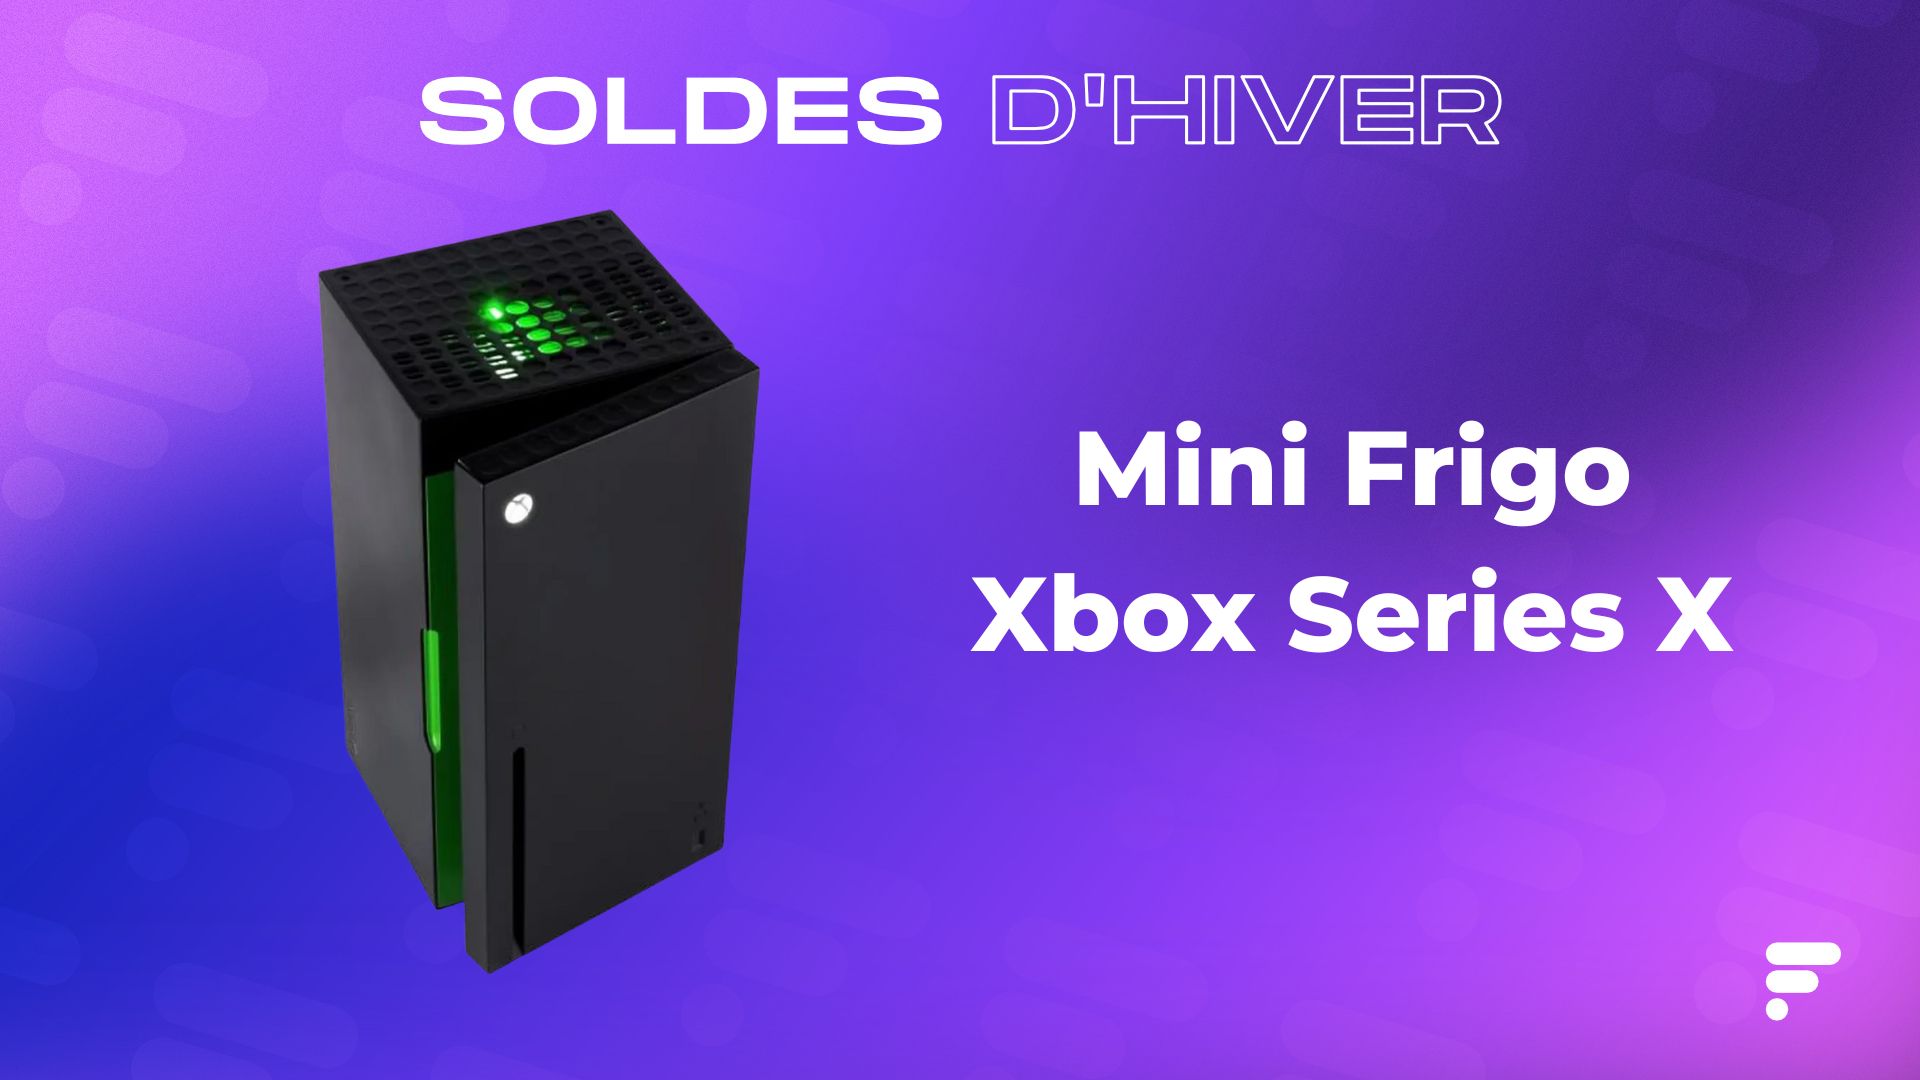 Le rafraîchissant Mini frigo Xbox Series X est moins cher pendant